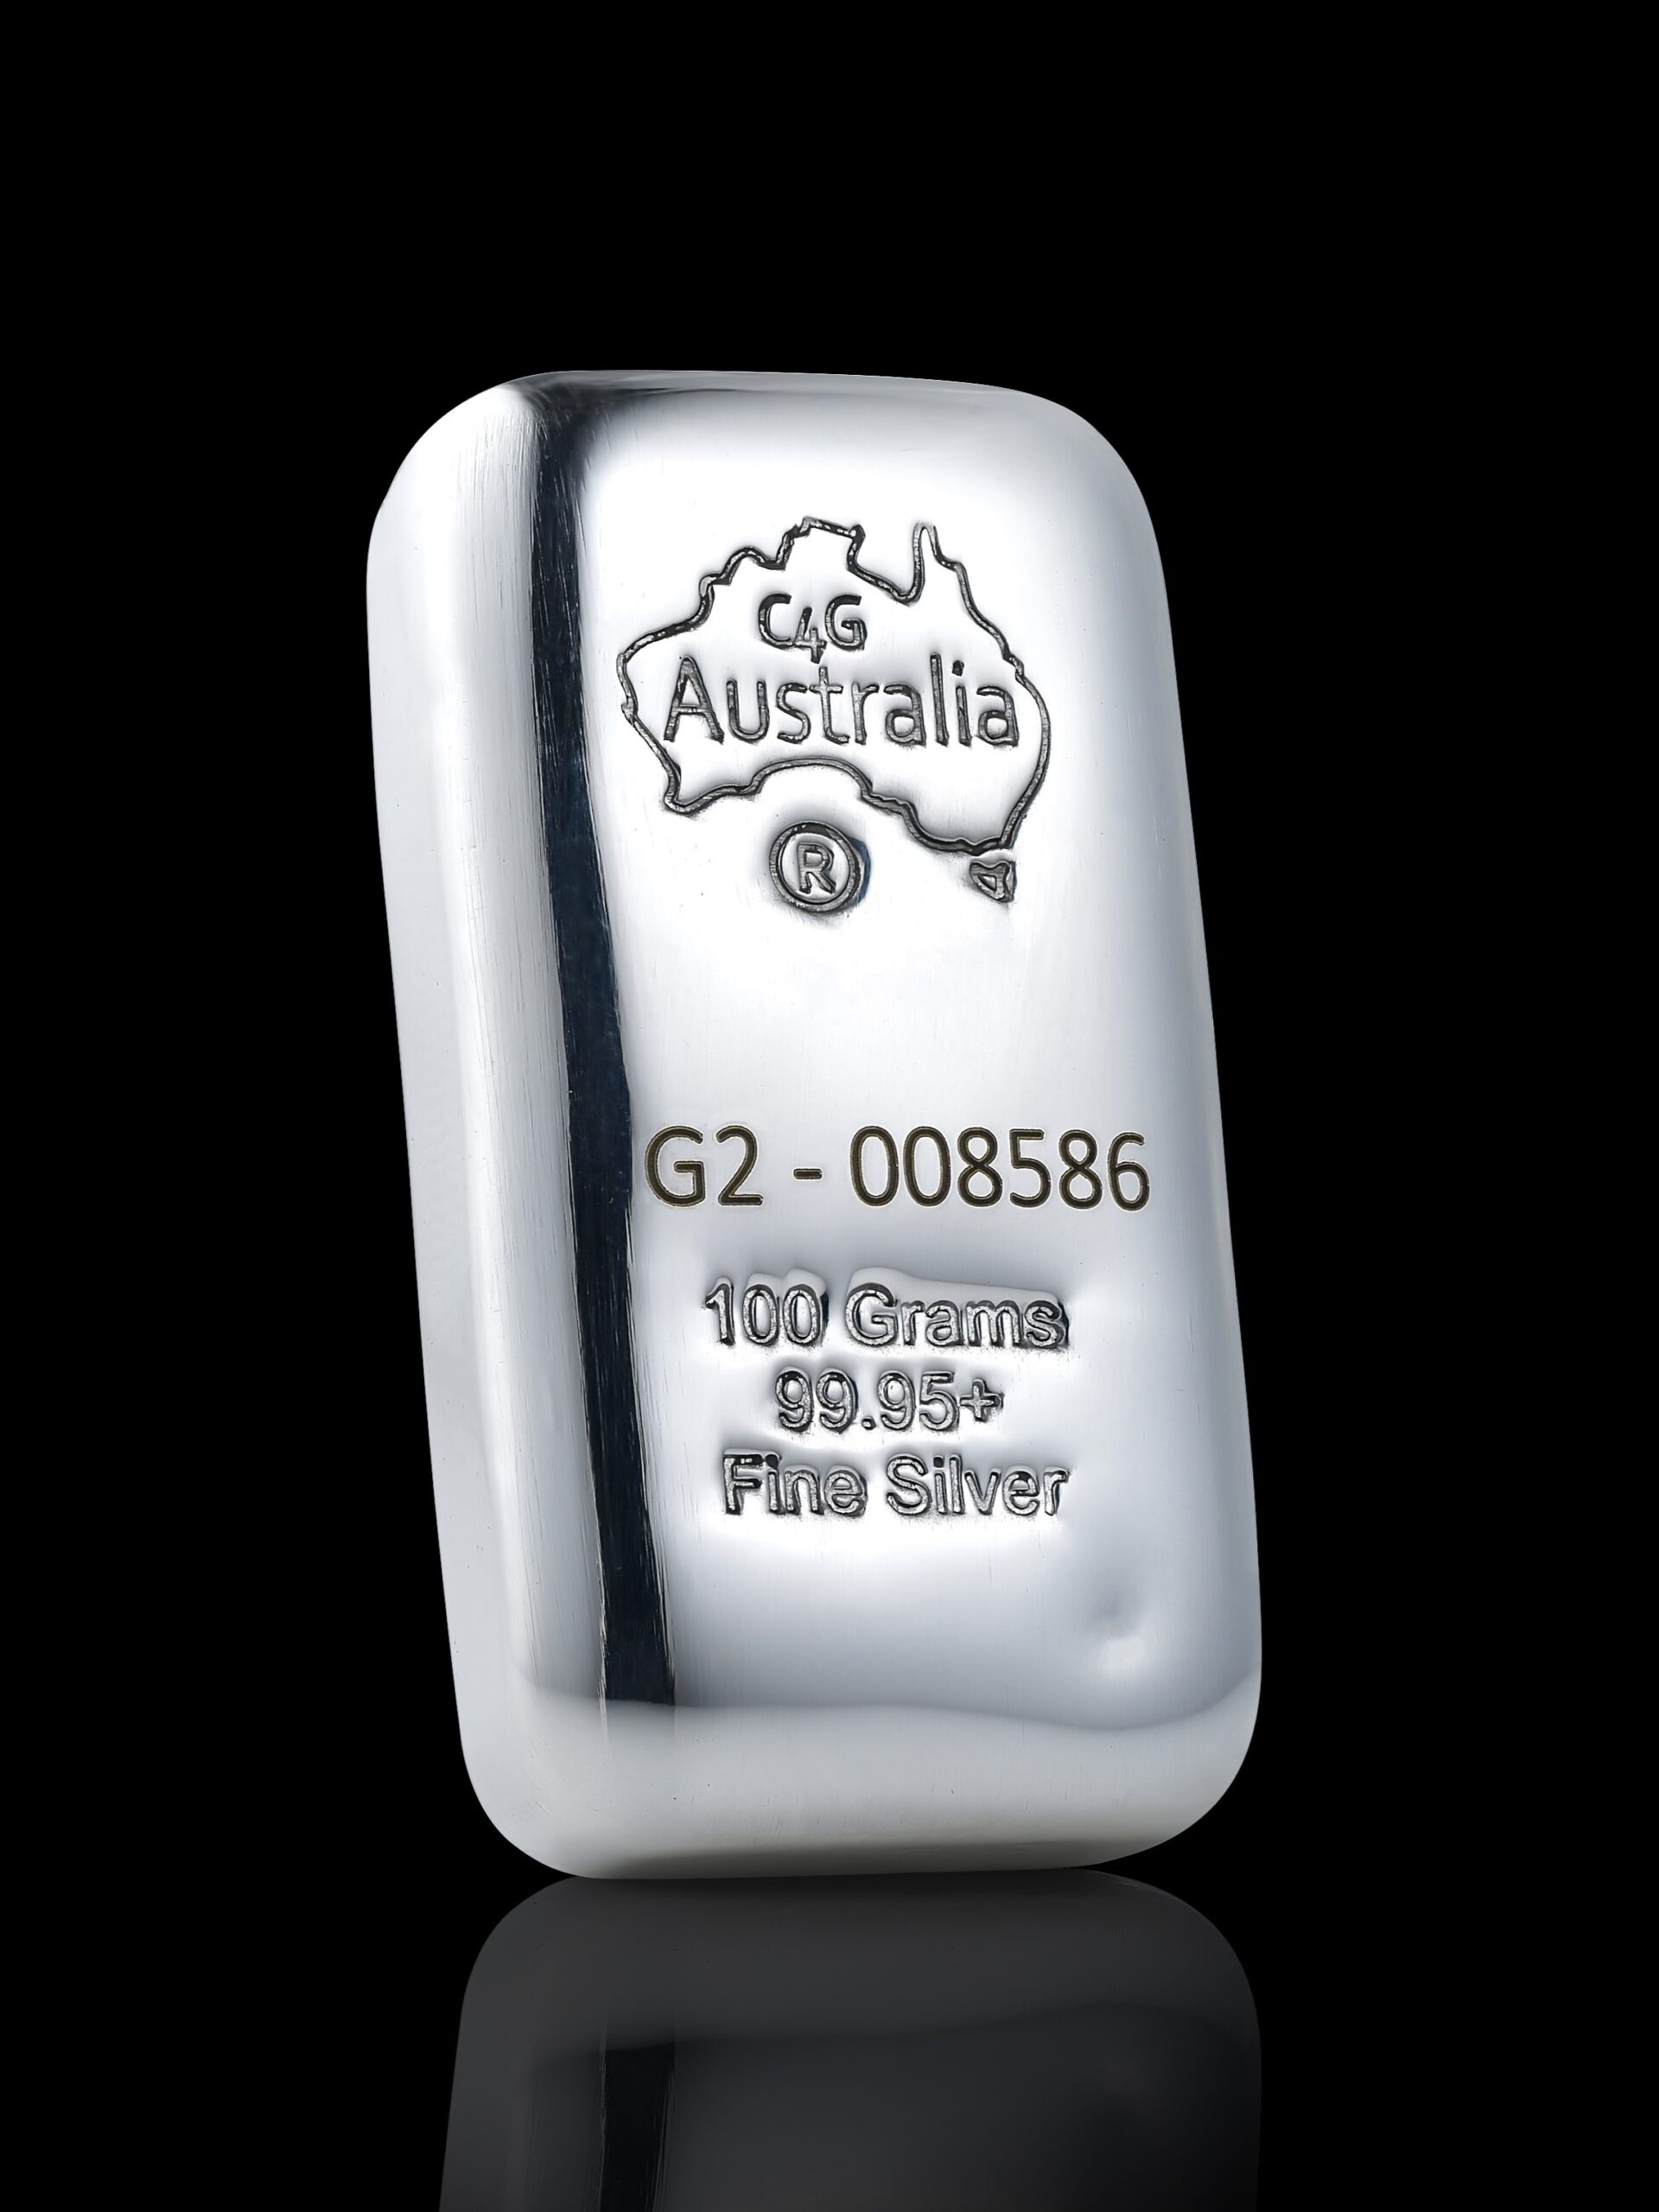 100 g C4G Cast Silver Bullion 99.95% Pure